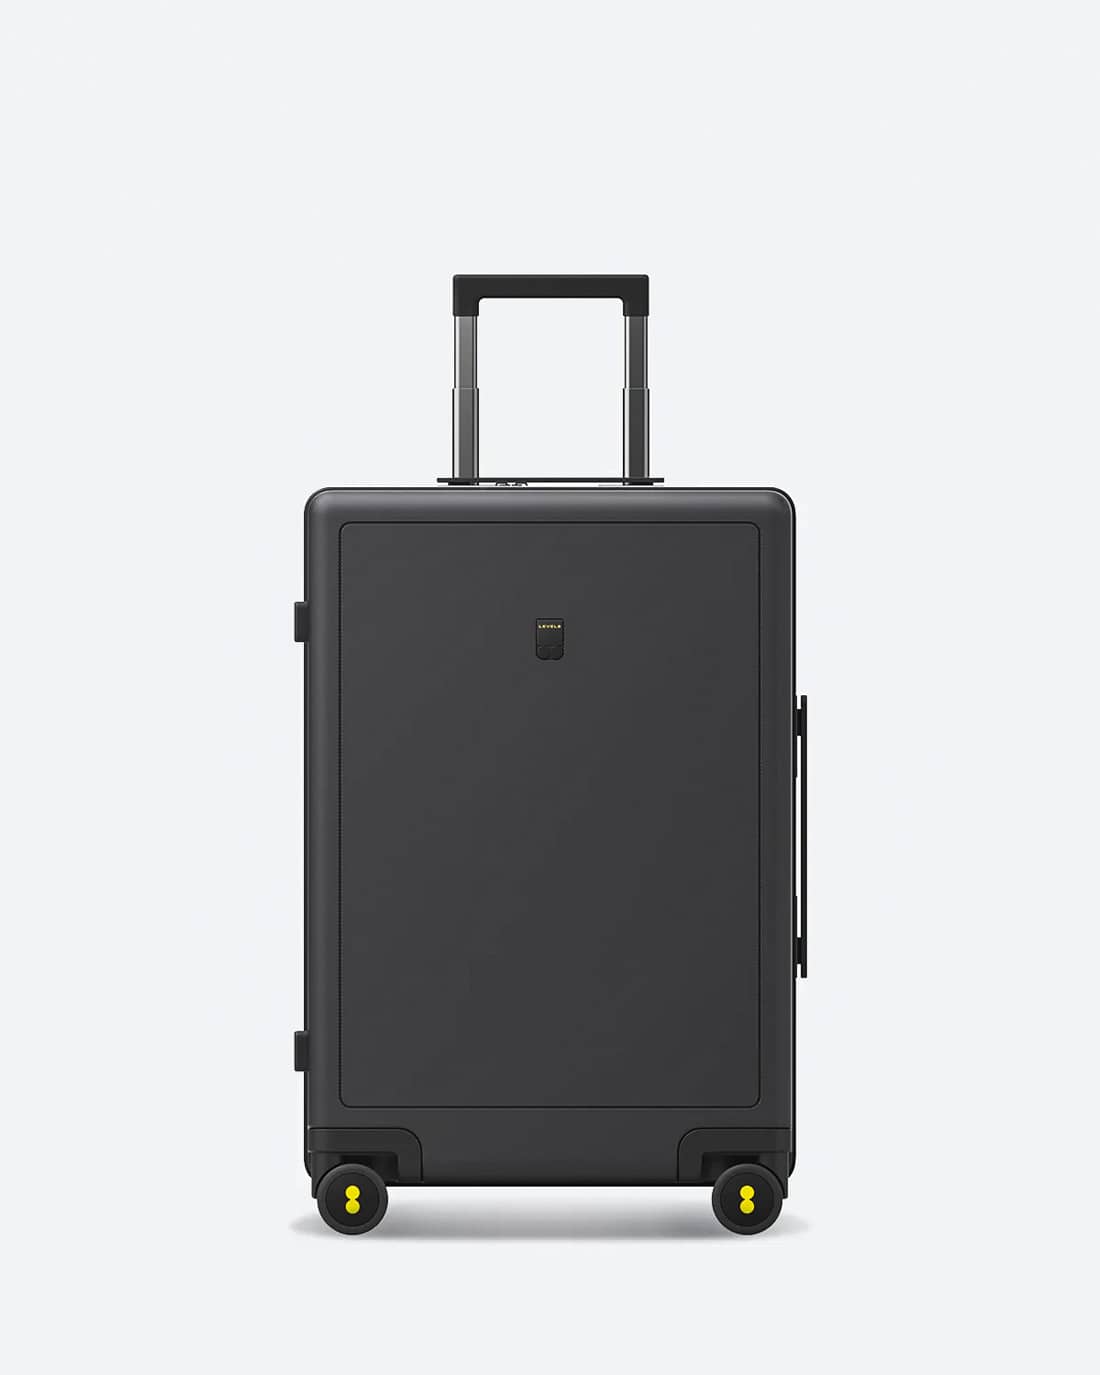 Minimalist cabin suitcase